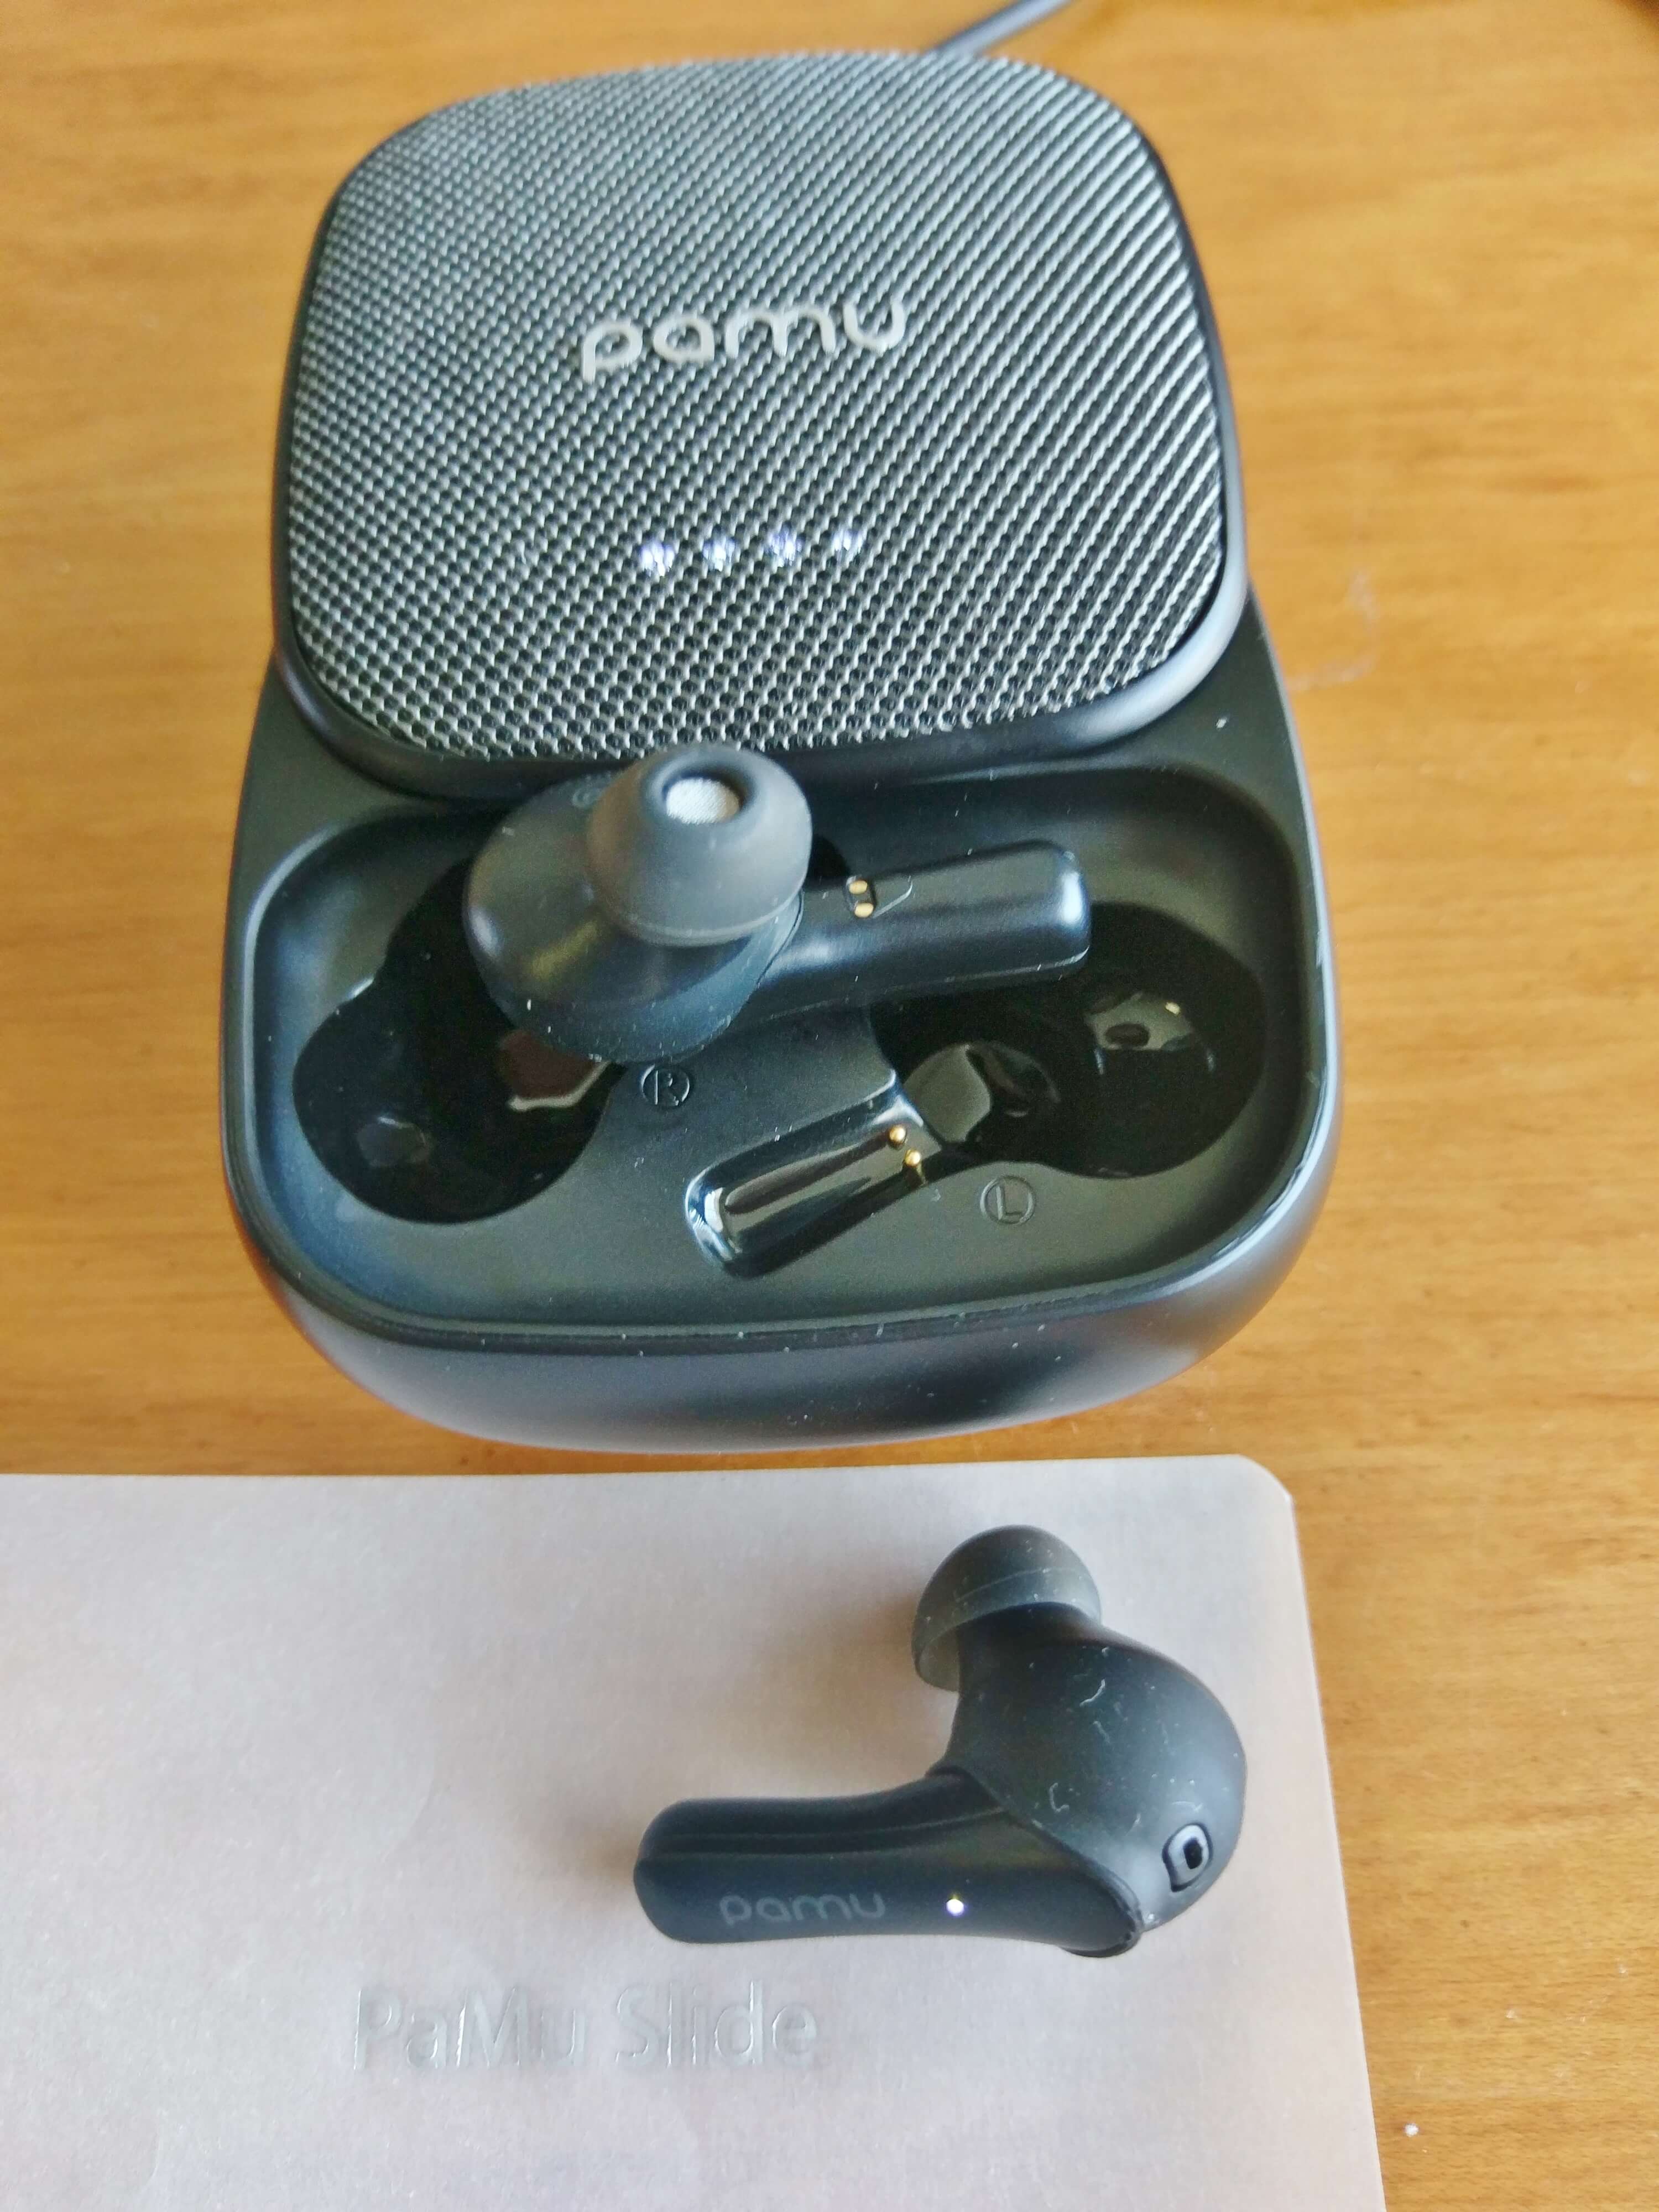 PaMu Slide Wireless Earbud Headphones